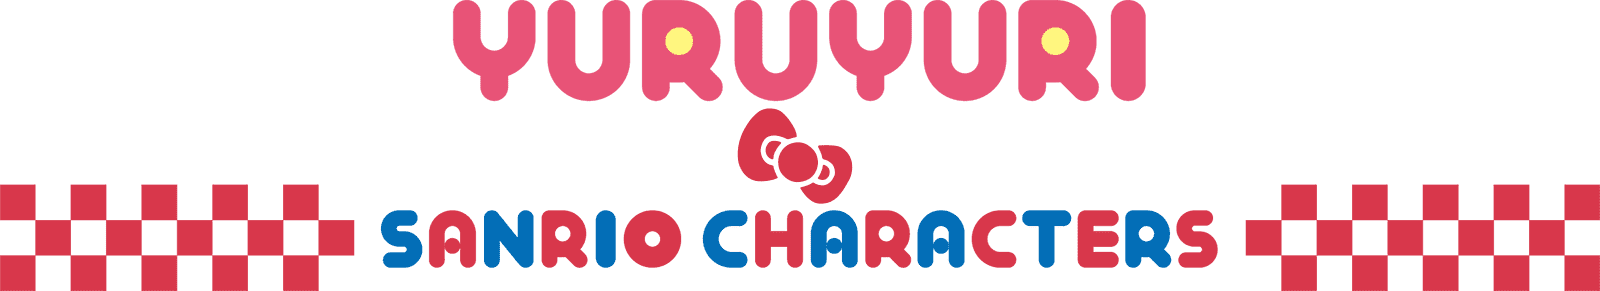 YURUYURI SANRIO CHARACTERS